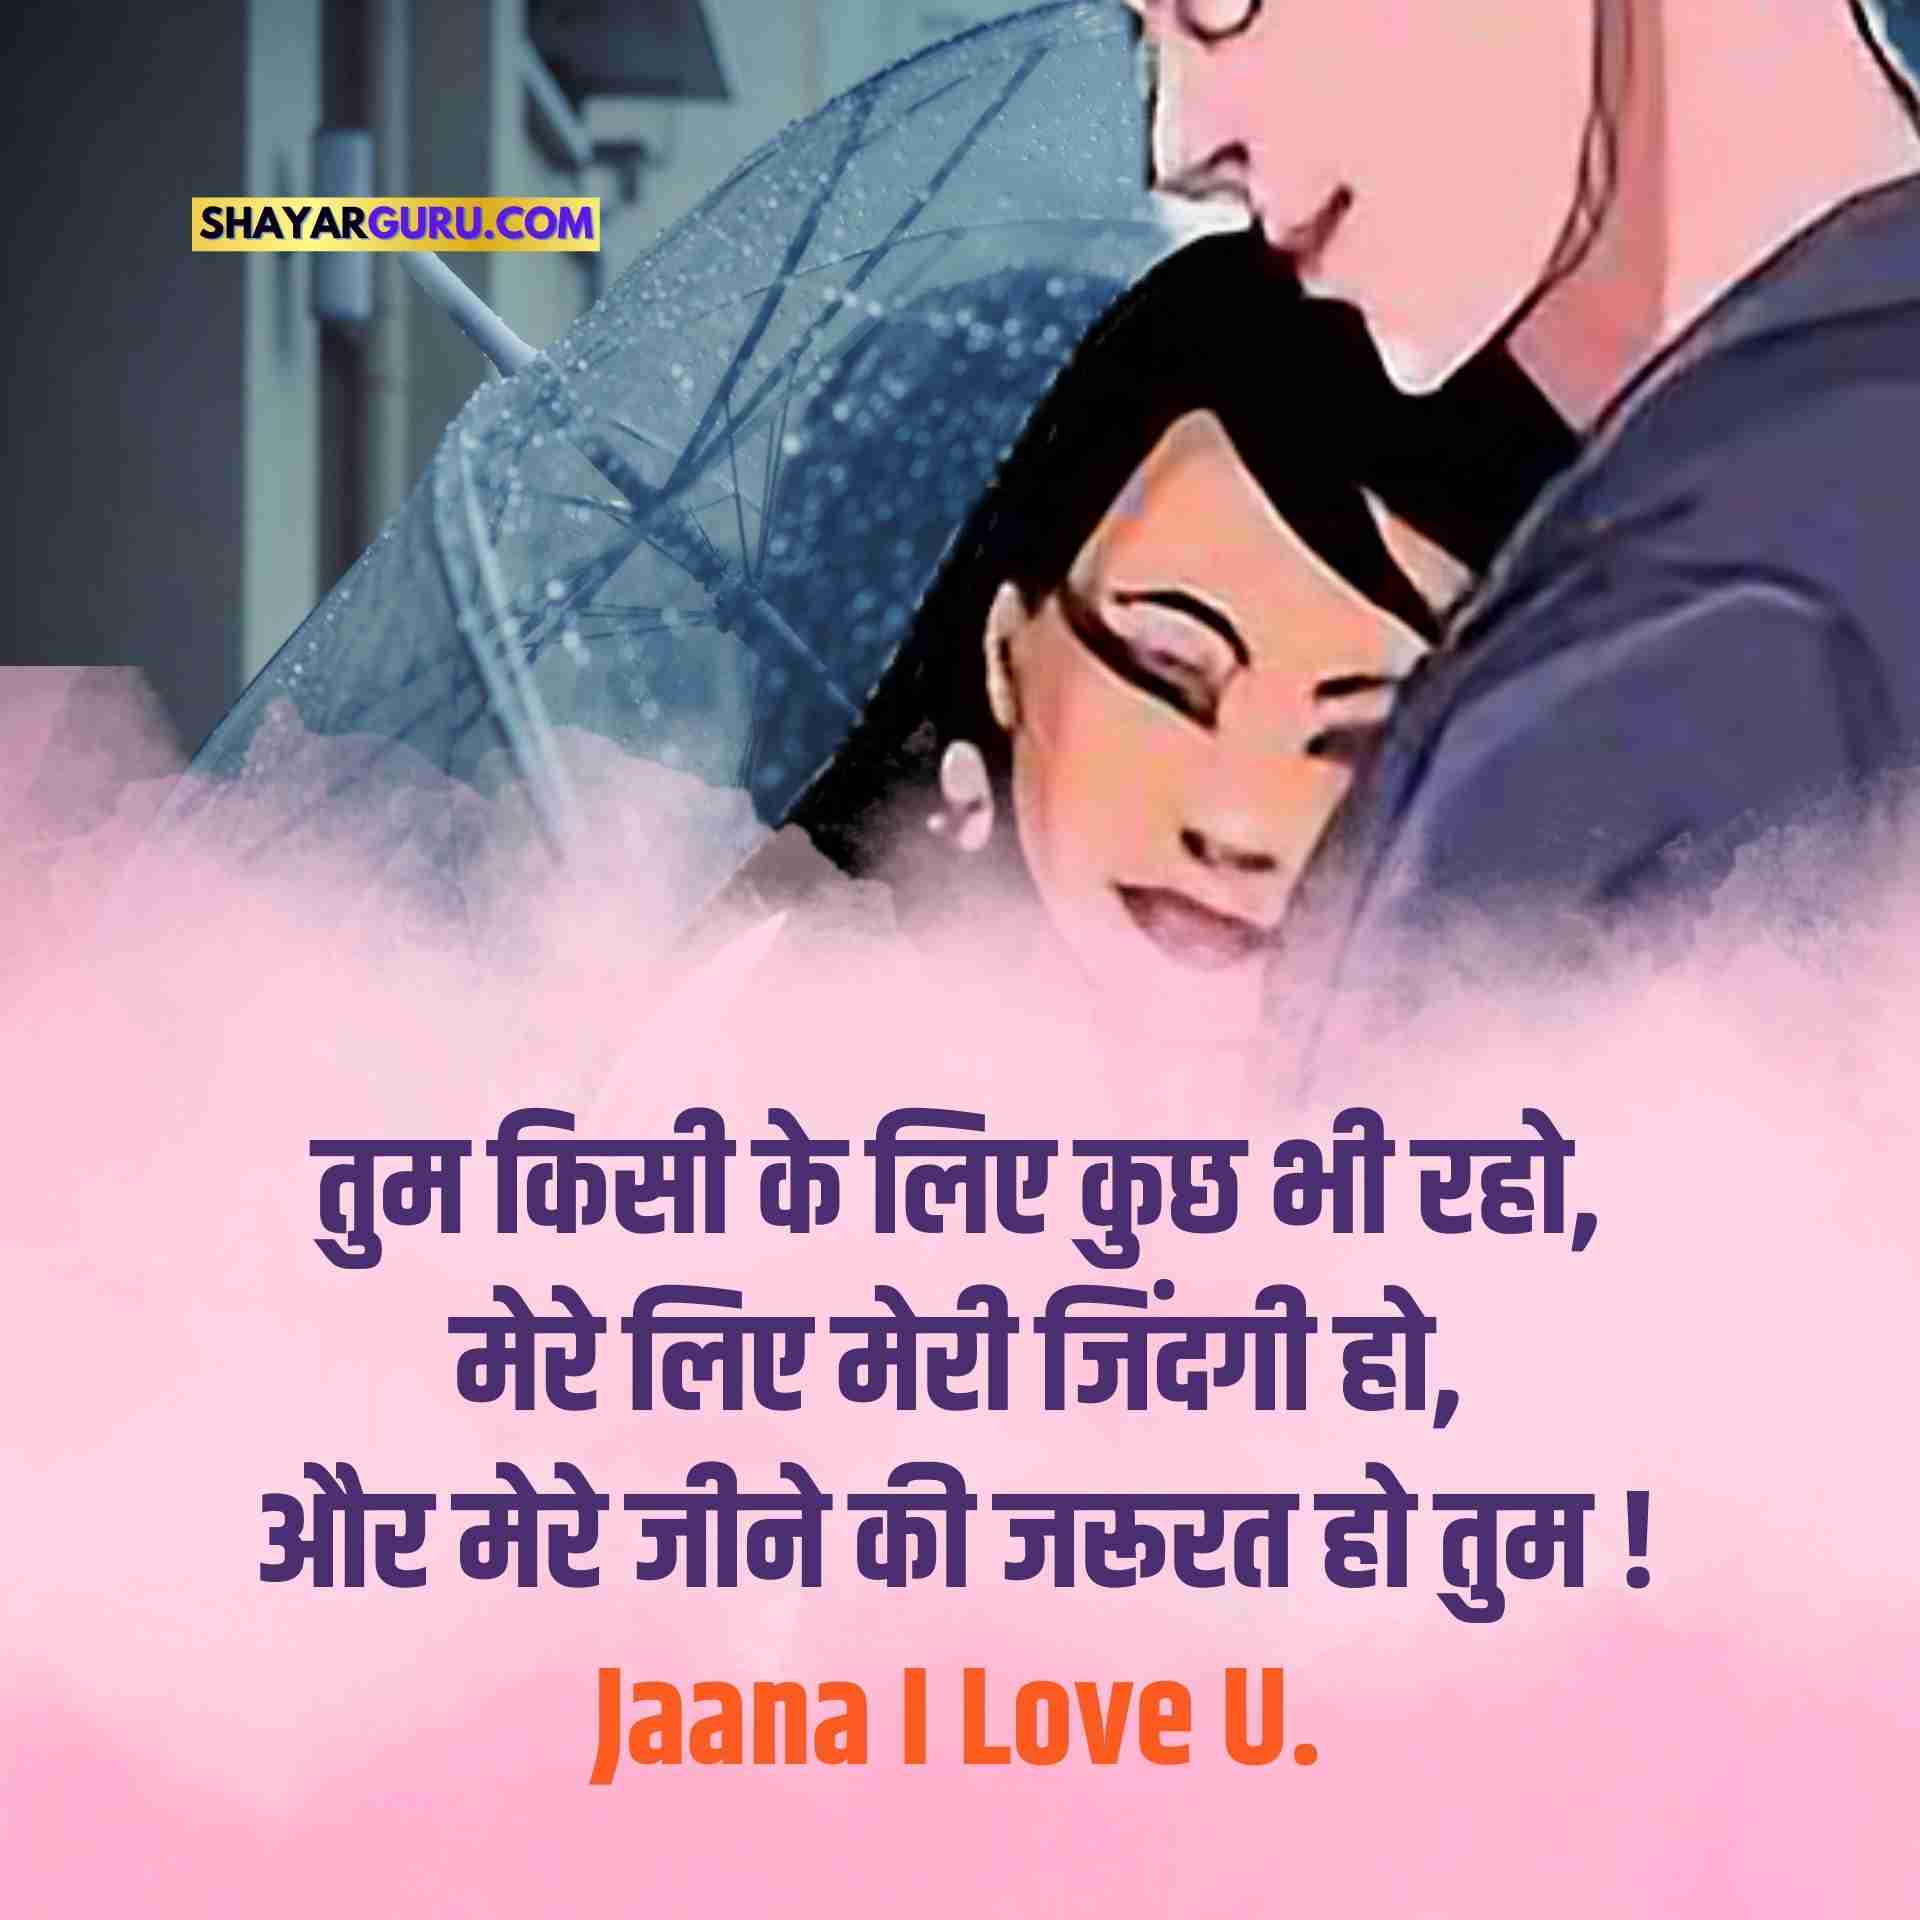 I Love You Shayari in Hindi Image